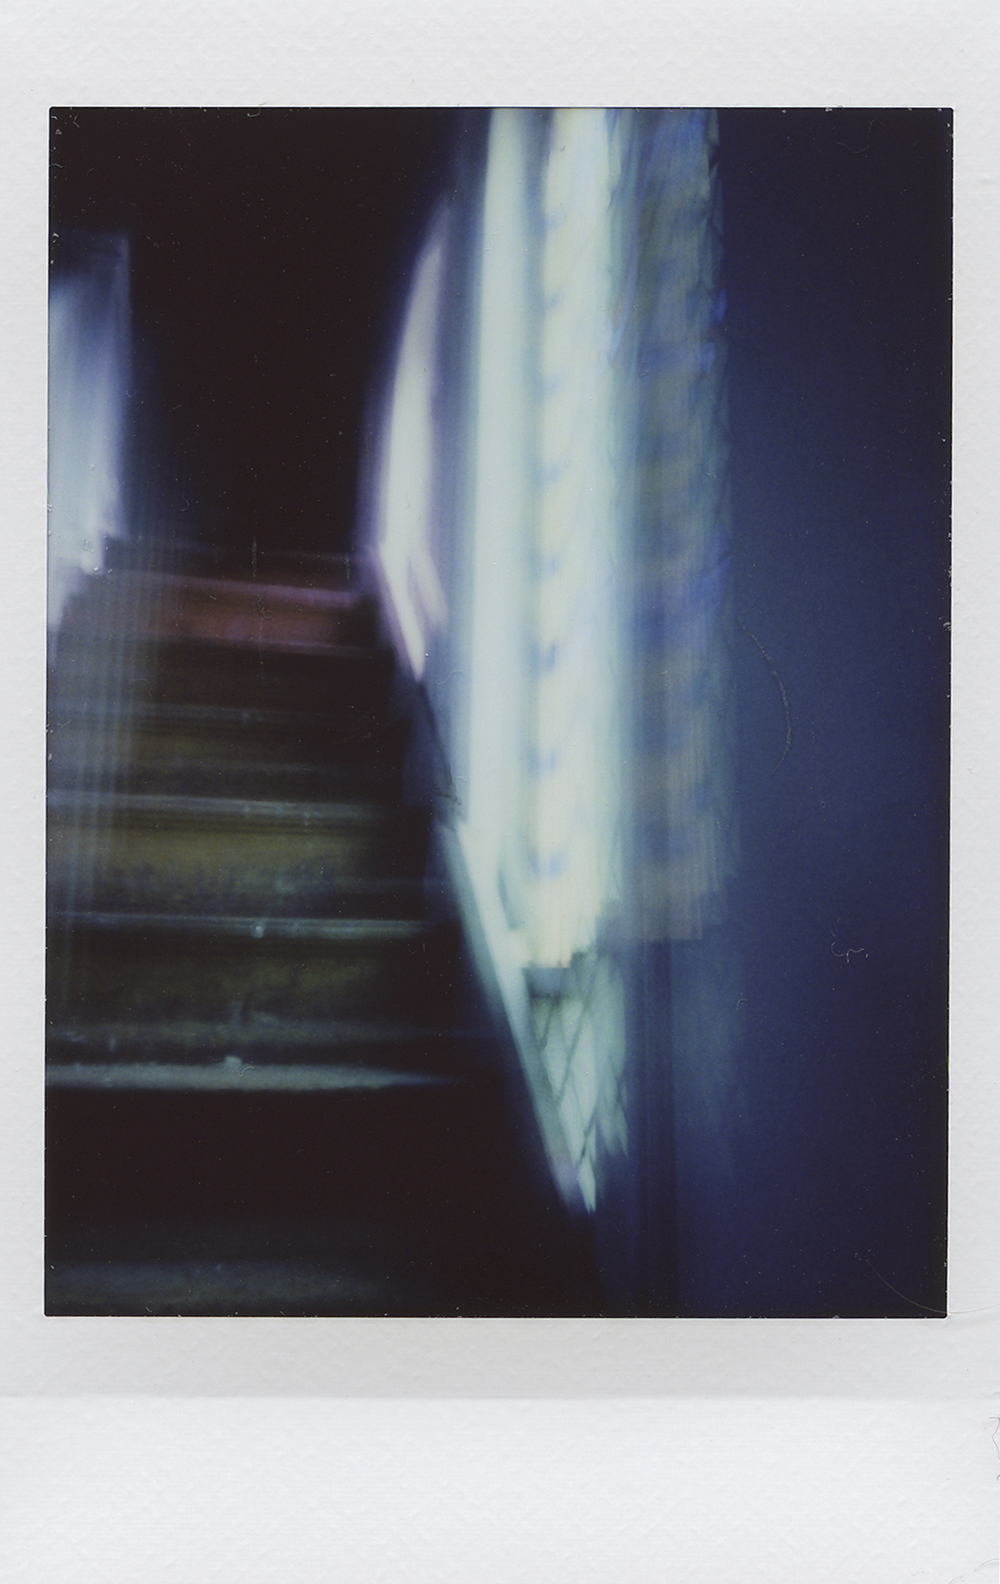 Amulti-colored staircase